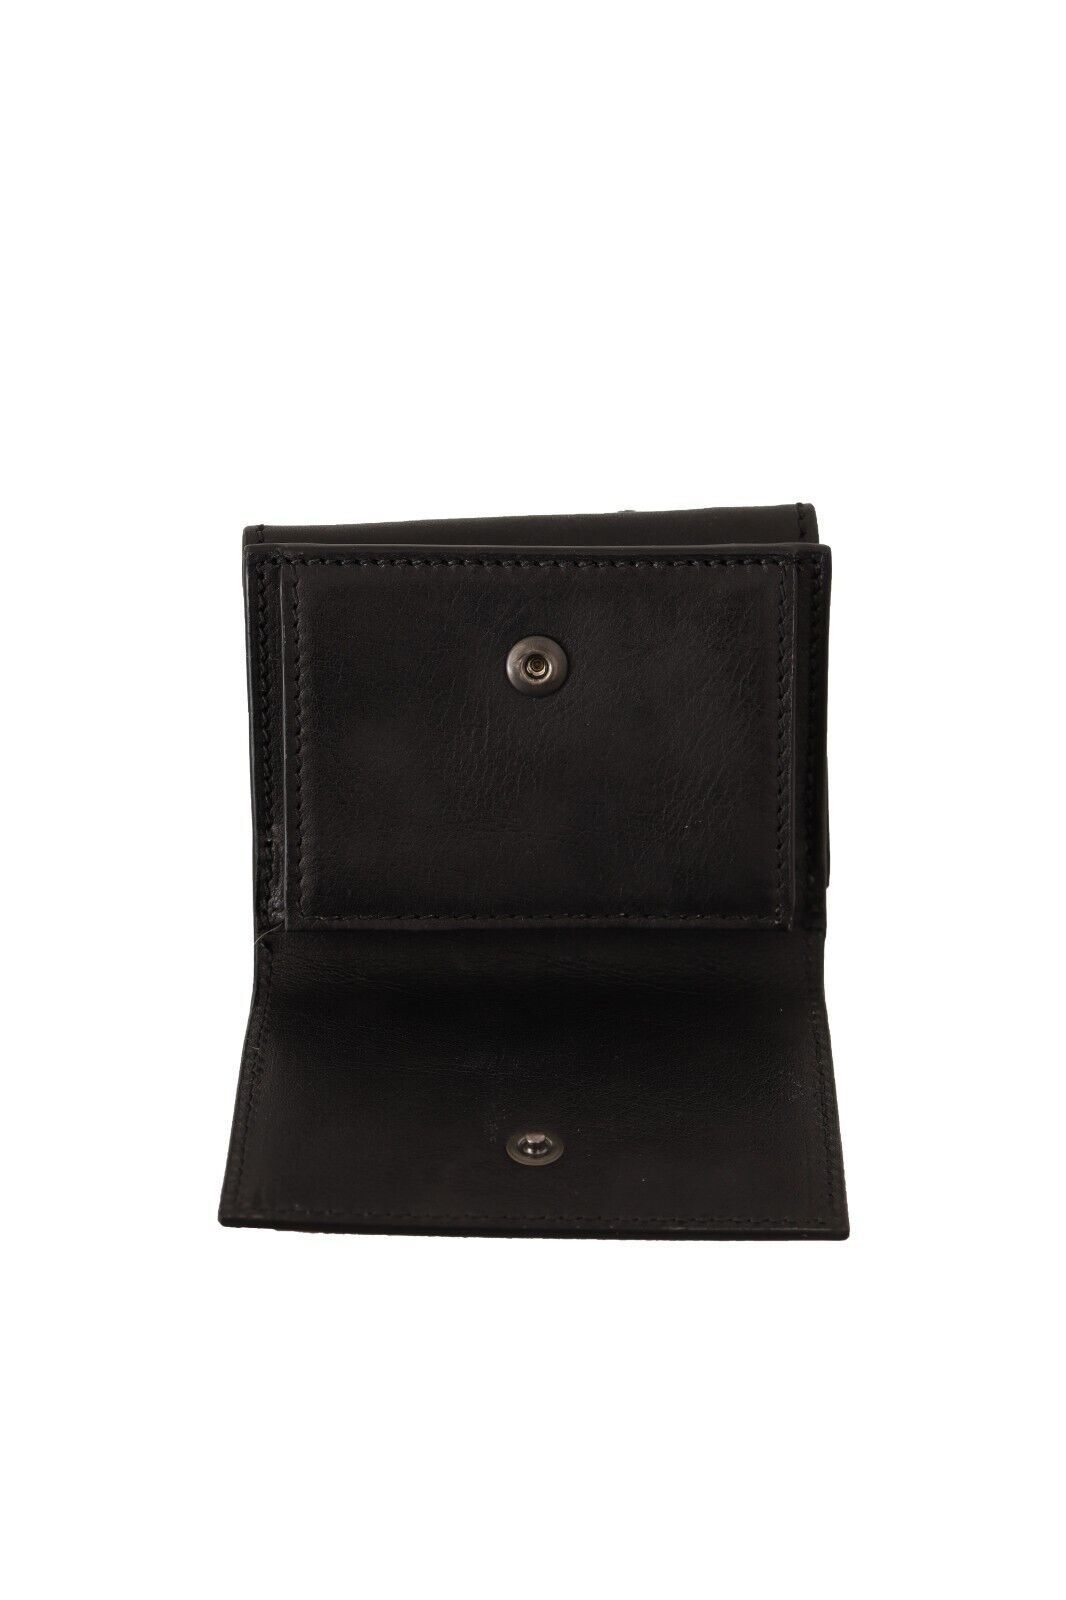 Dolce & Gabbana in pelle nera Trifold Borse Belt Cint Multi Kit Portafoglio